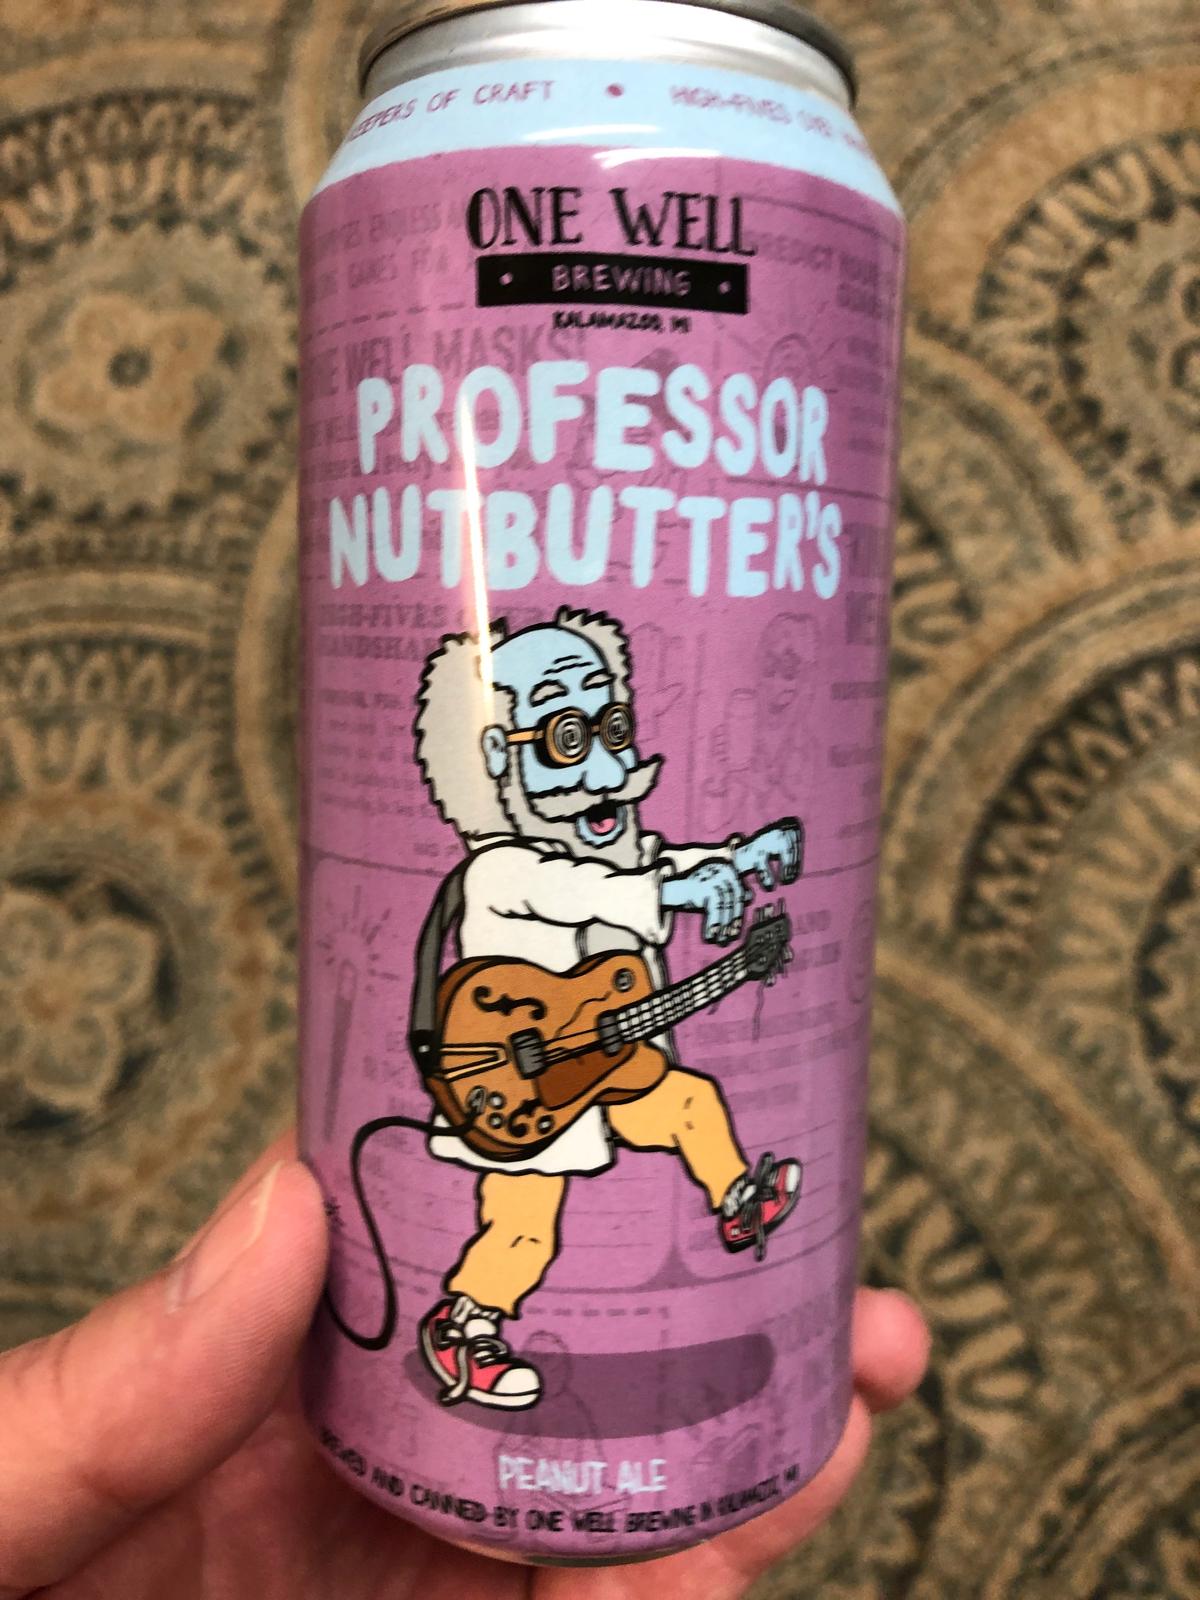 Professor Nutbutter